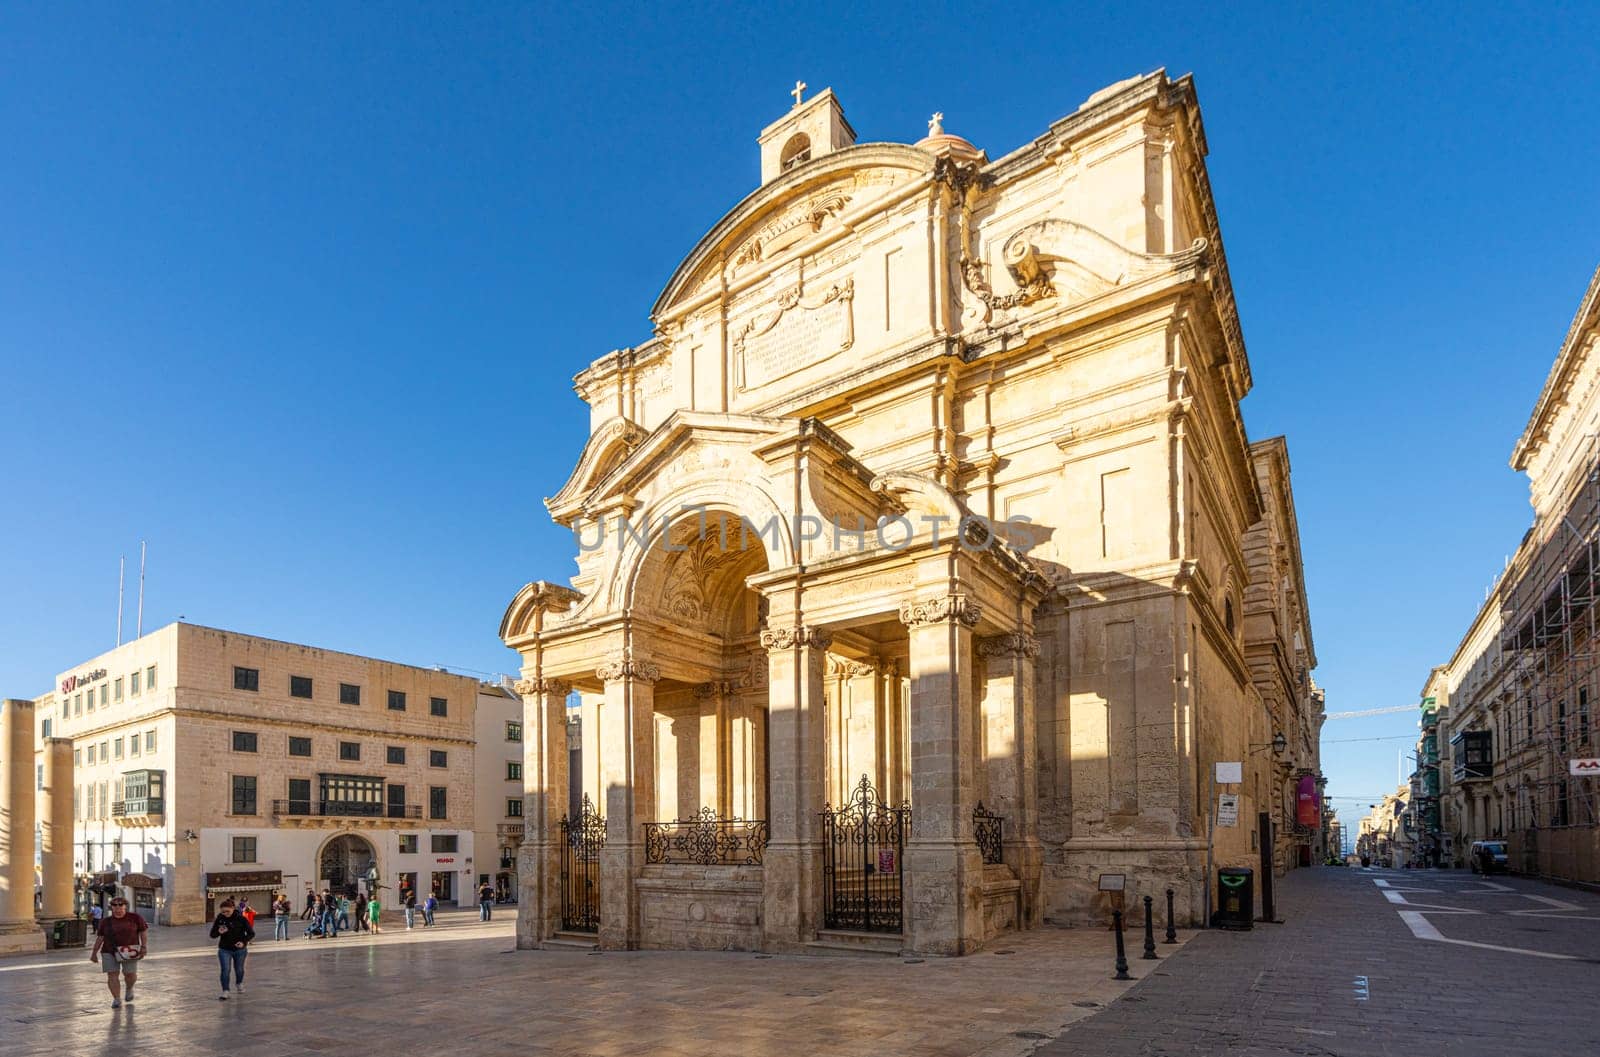  Church of St. Catherine of Alexandria in Vallertta, Malta by sergiodv